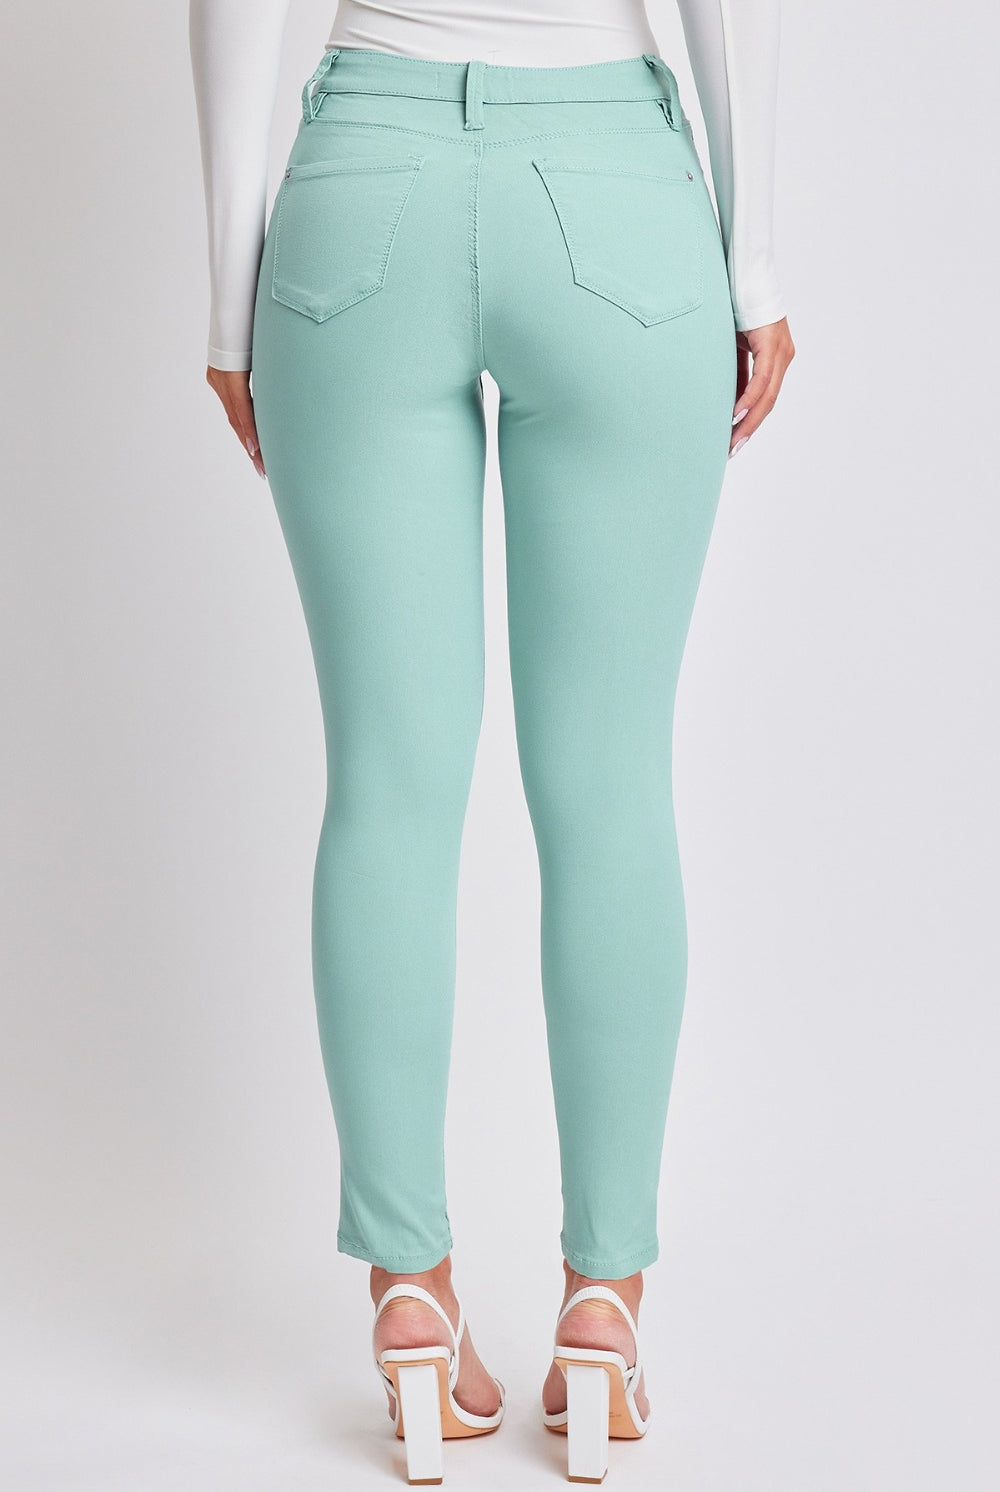 Elegant model wearing chic seafoam mid-rise skinny jeans, epitomizing casual sophistication.